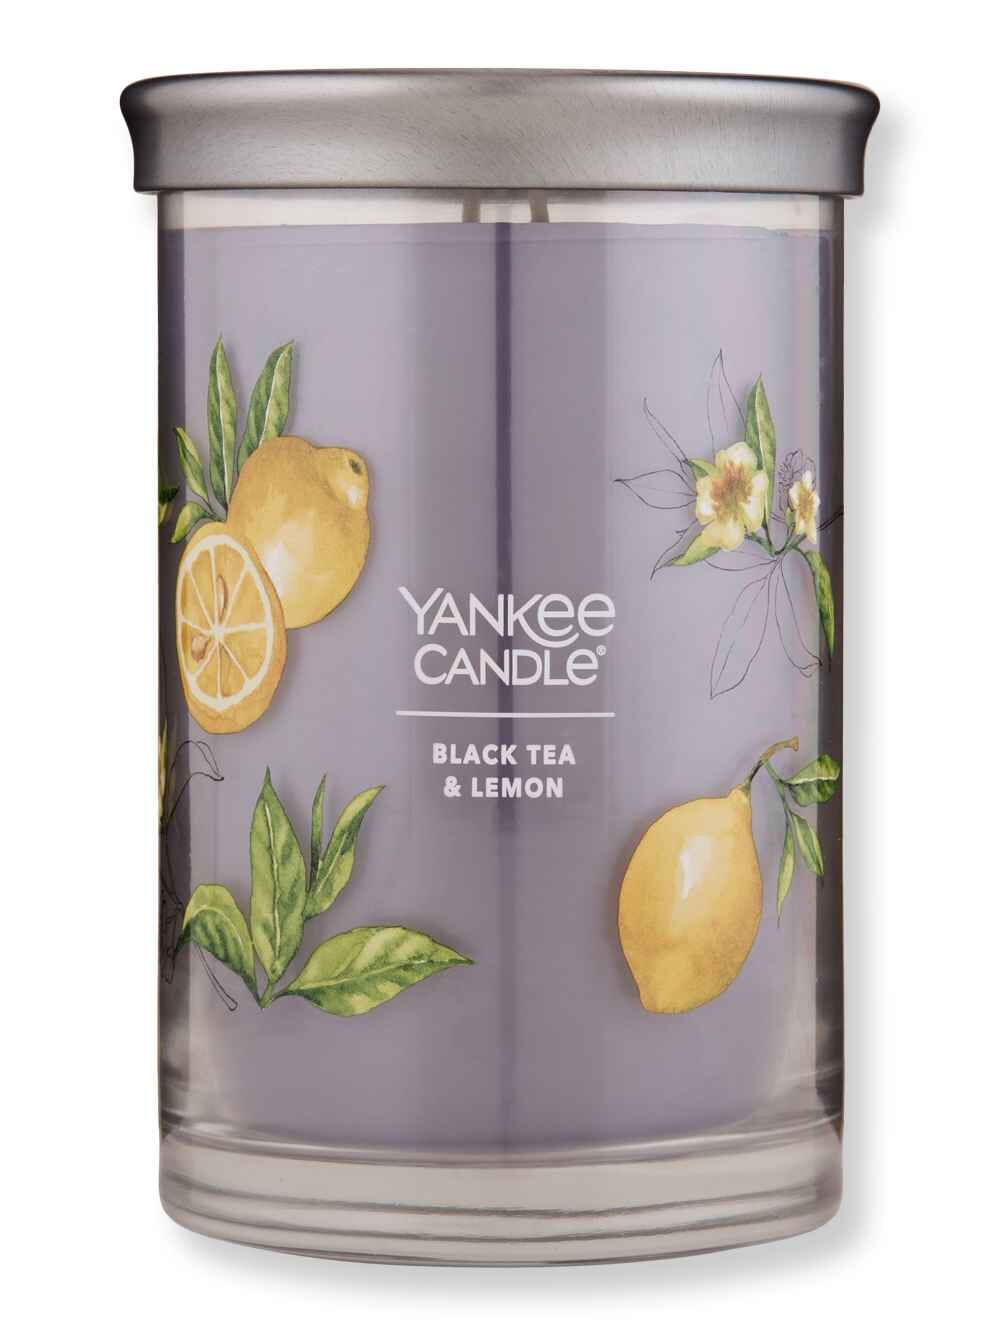 Yankee Candle Yankee Candle Black Tea & Lemon Signature Large 2-Wick Tumbler Candle 20 oz Candles & Diffusers 